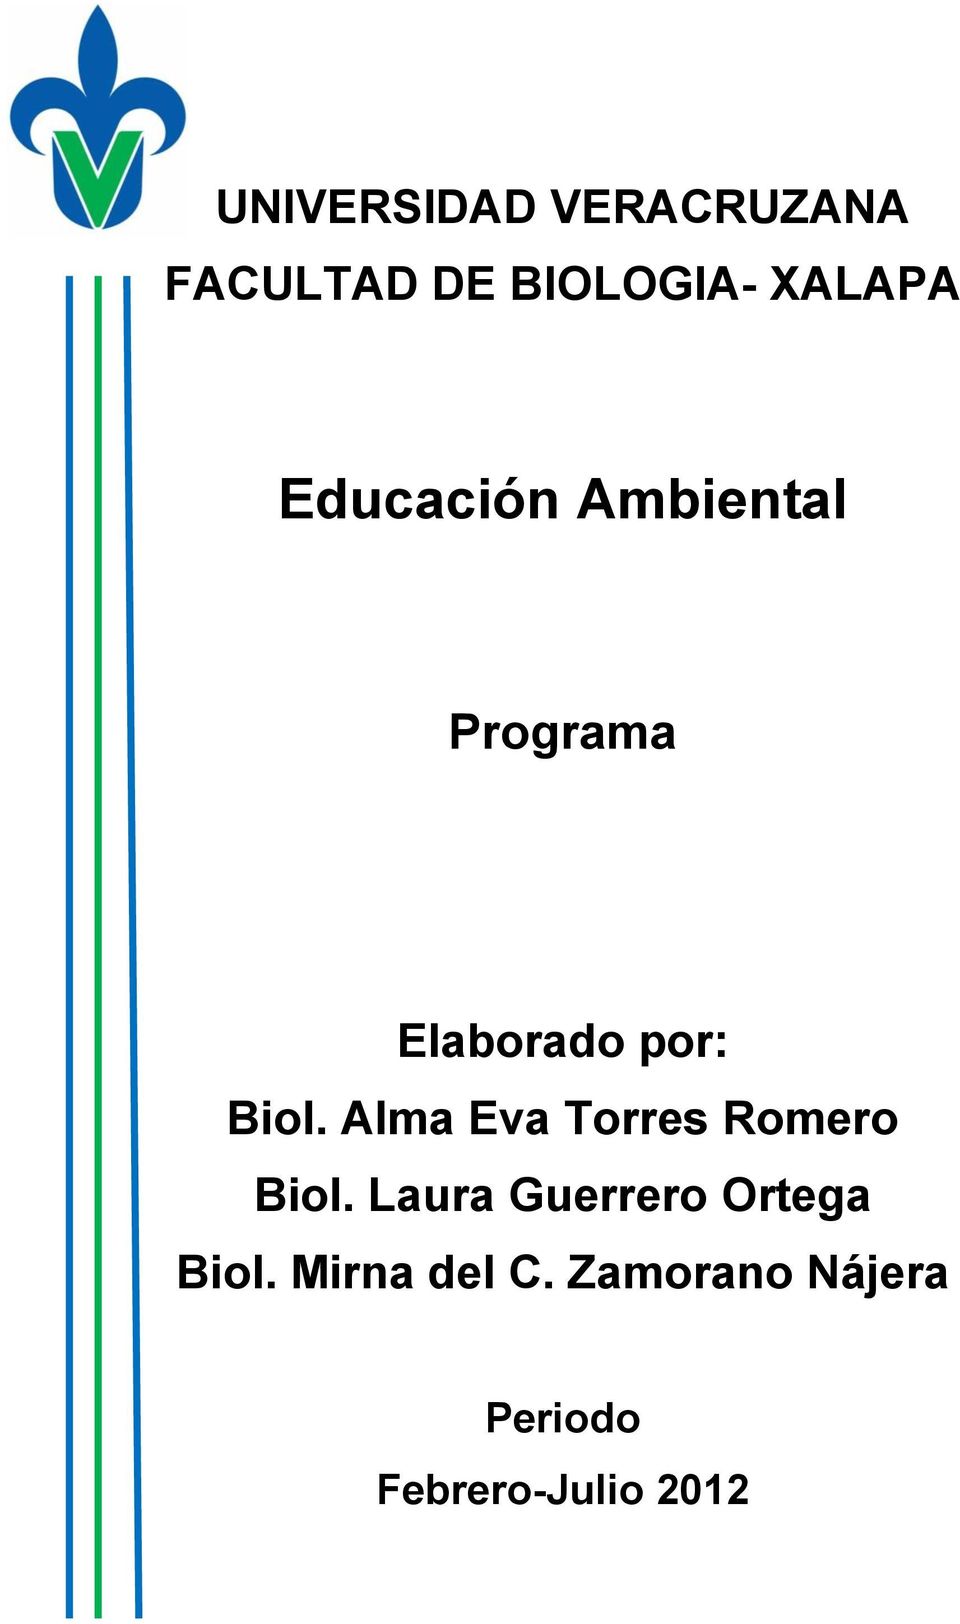 Alma Eva Torres Romero Biol.